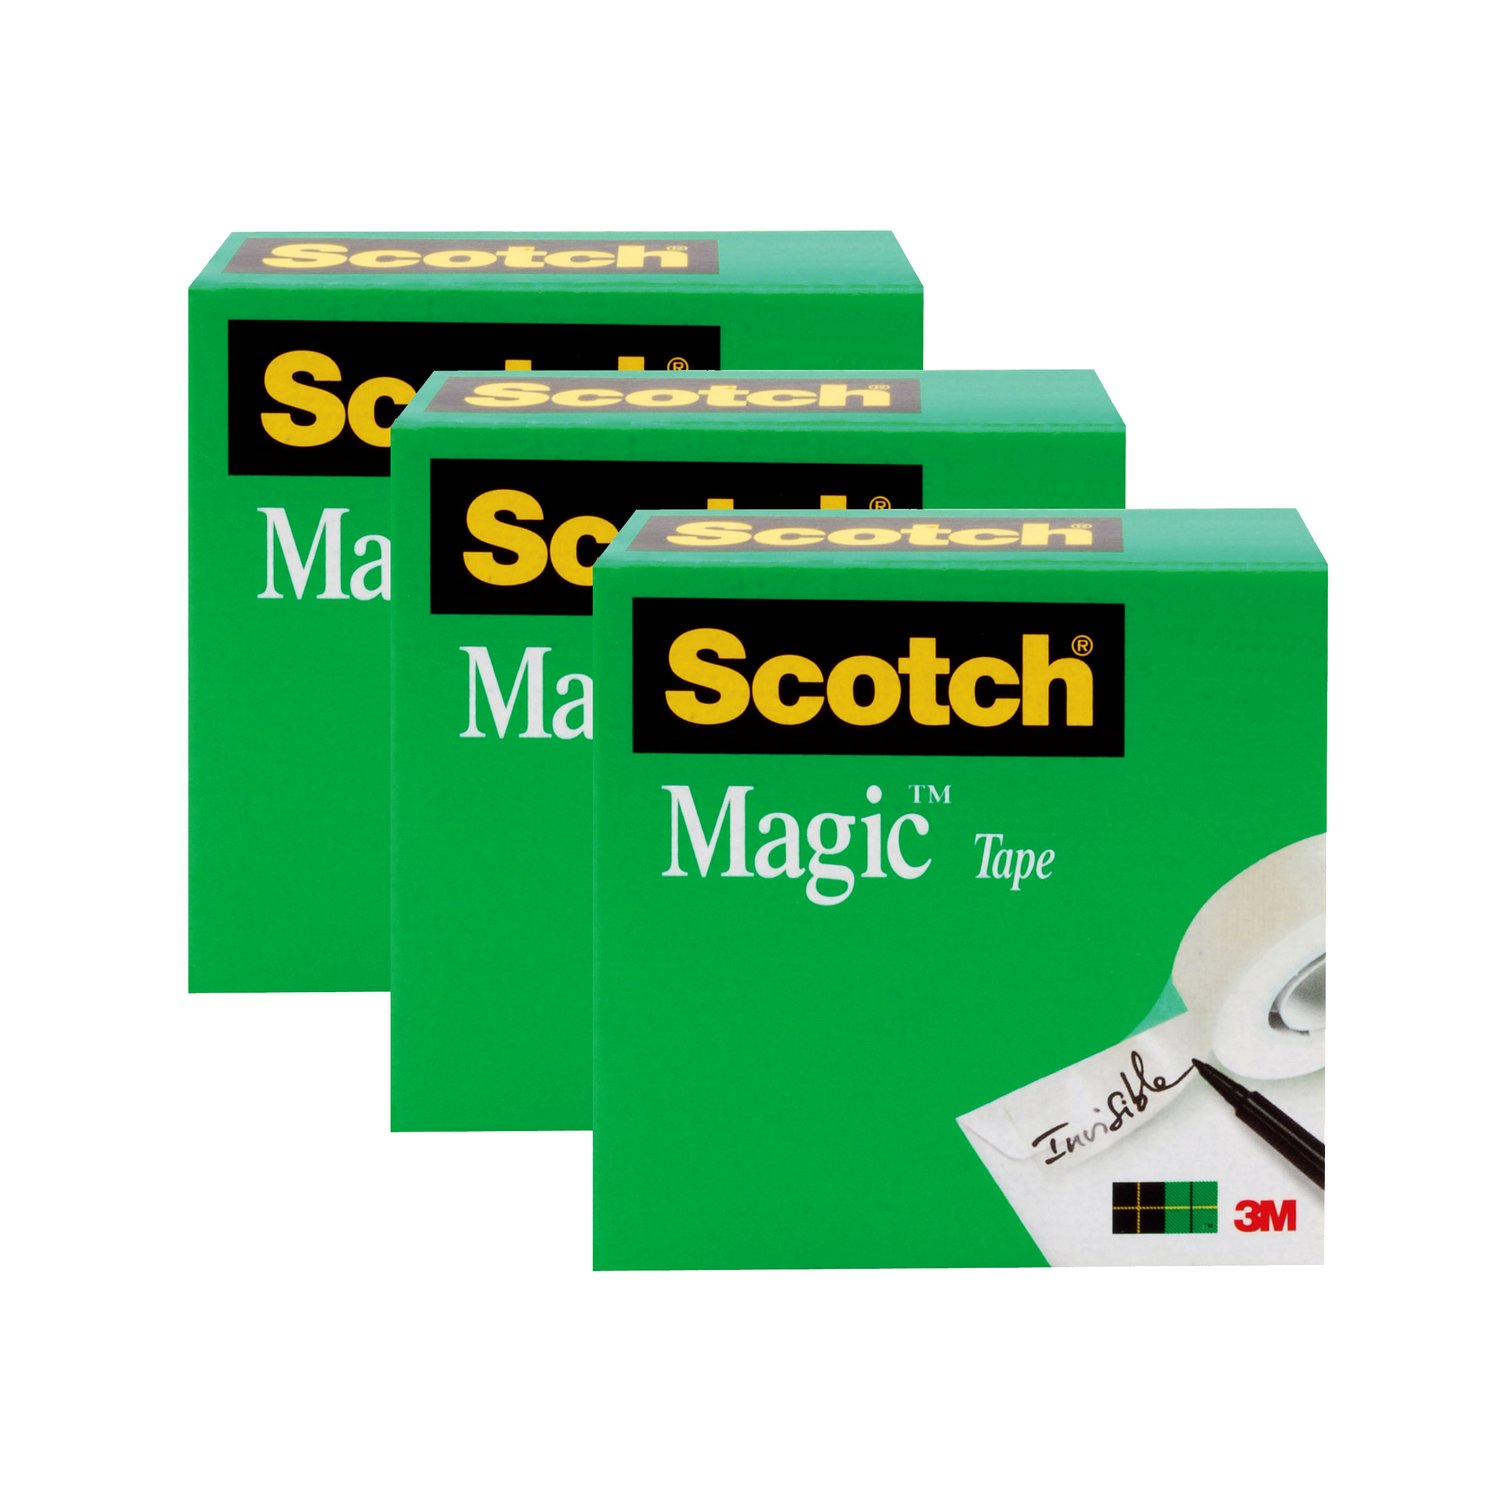 Scotch Magic 810 office tape (pack of 8)